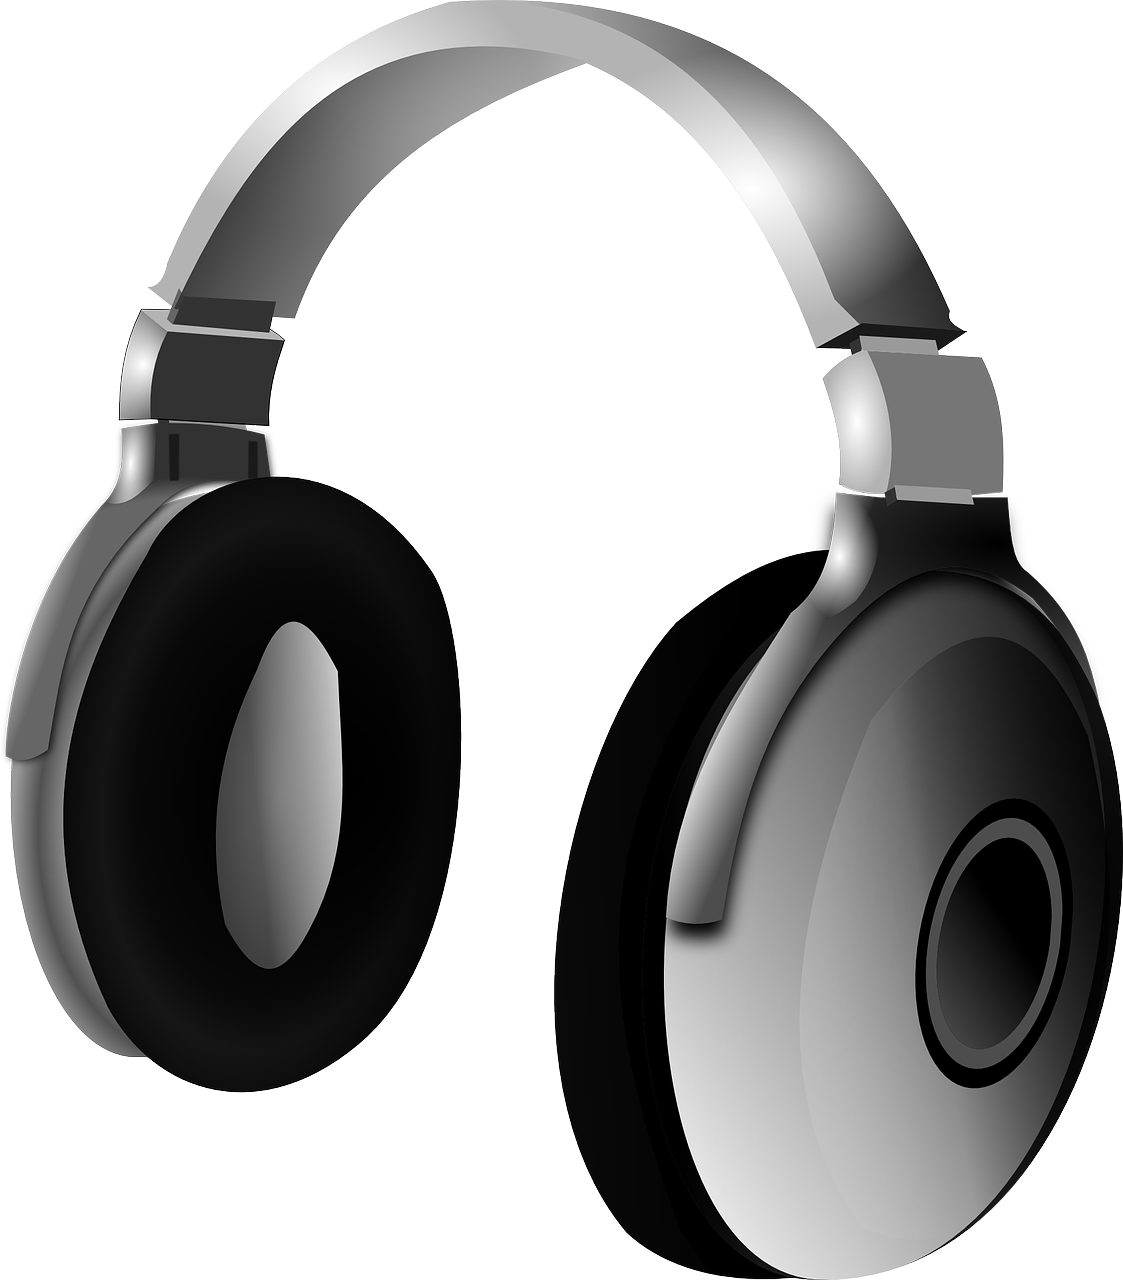 Audio (c) pixabay.com